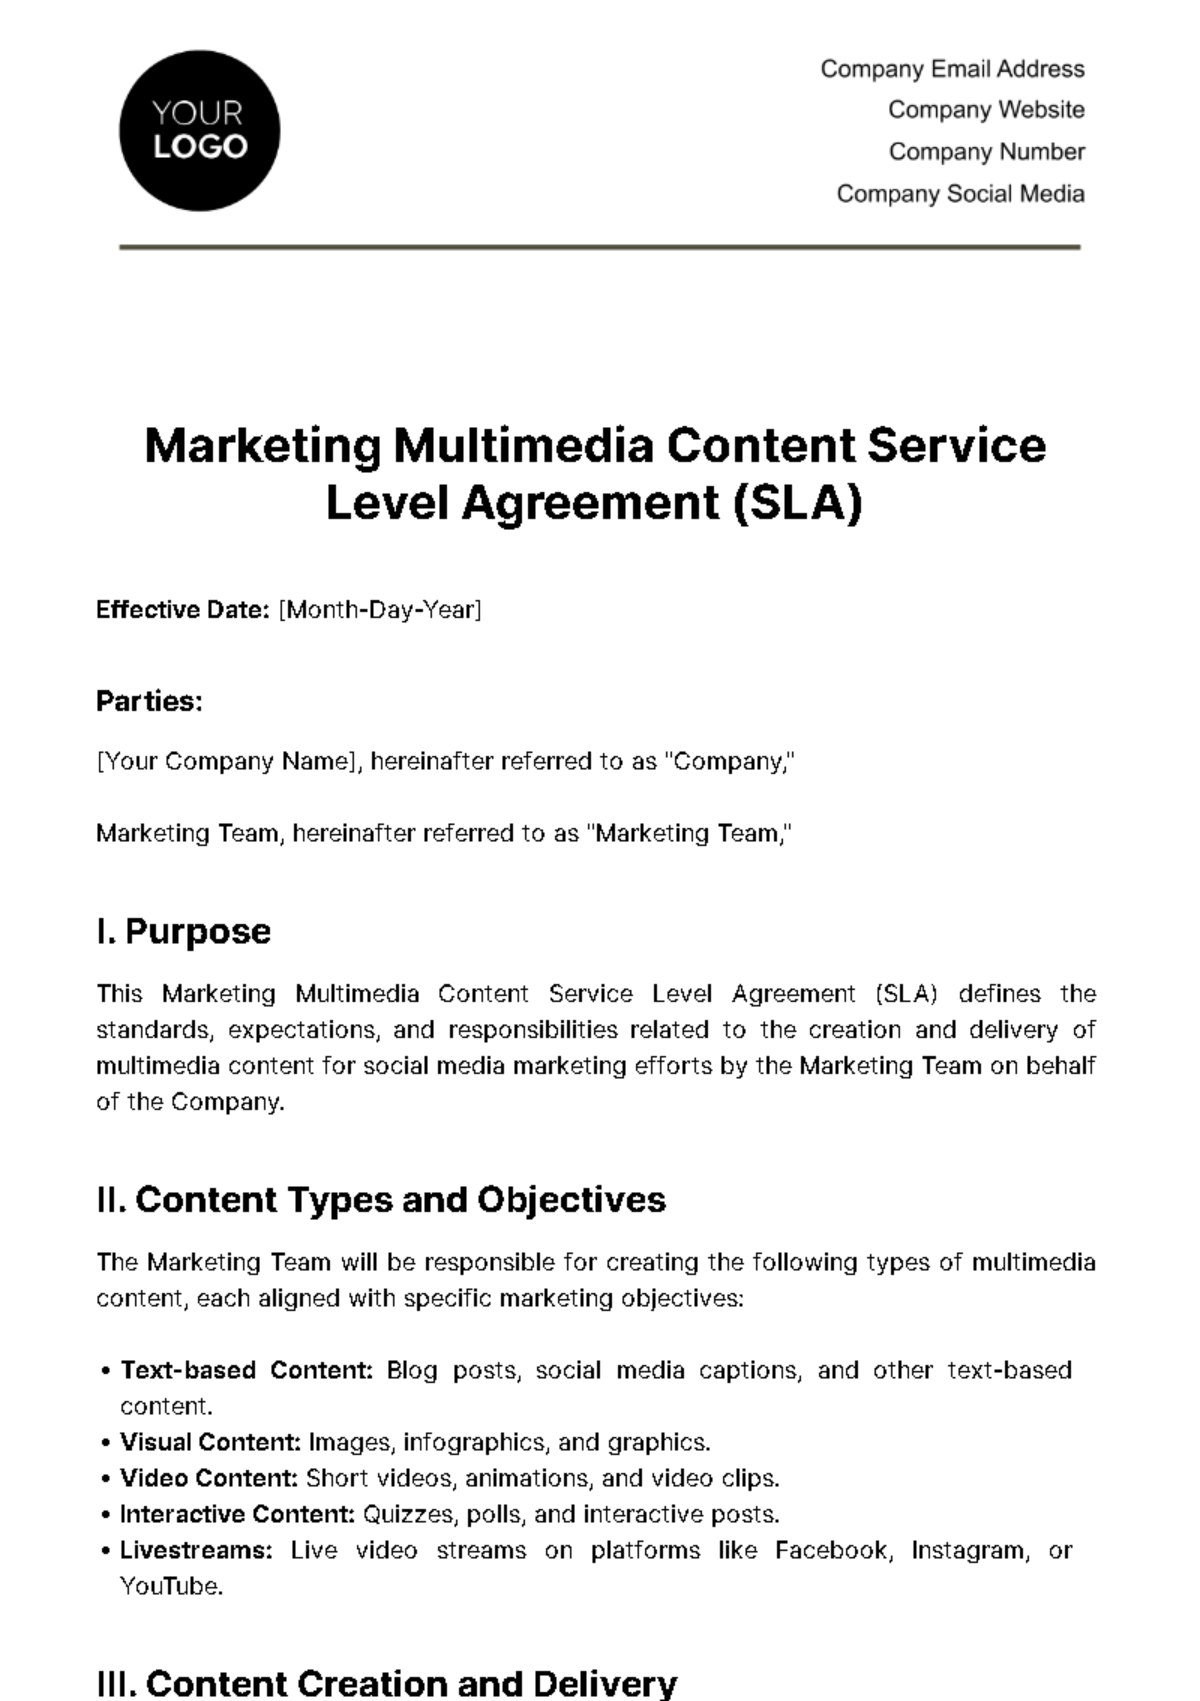 Free Marketing Multimedia Content SLA Template